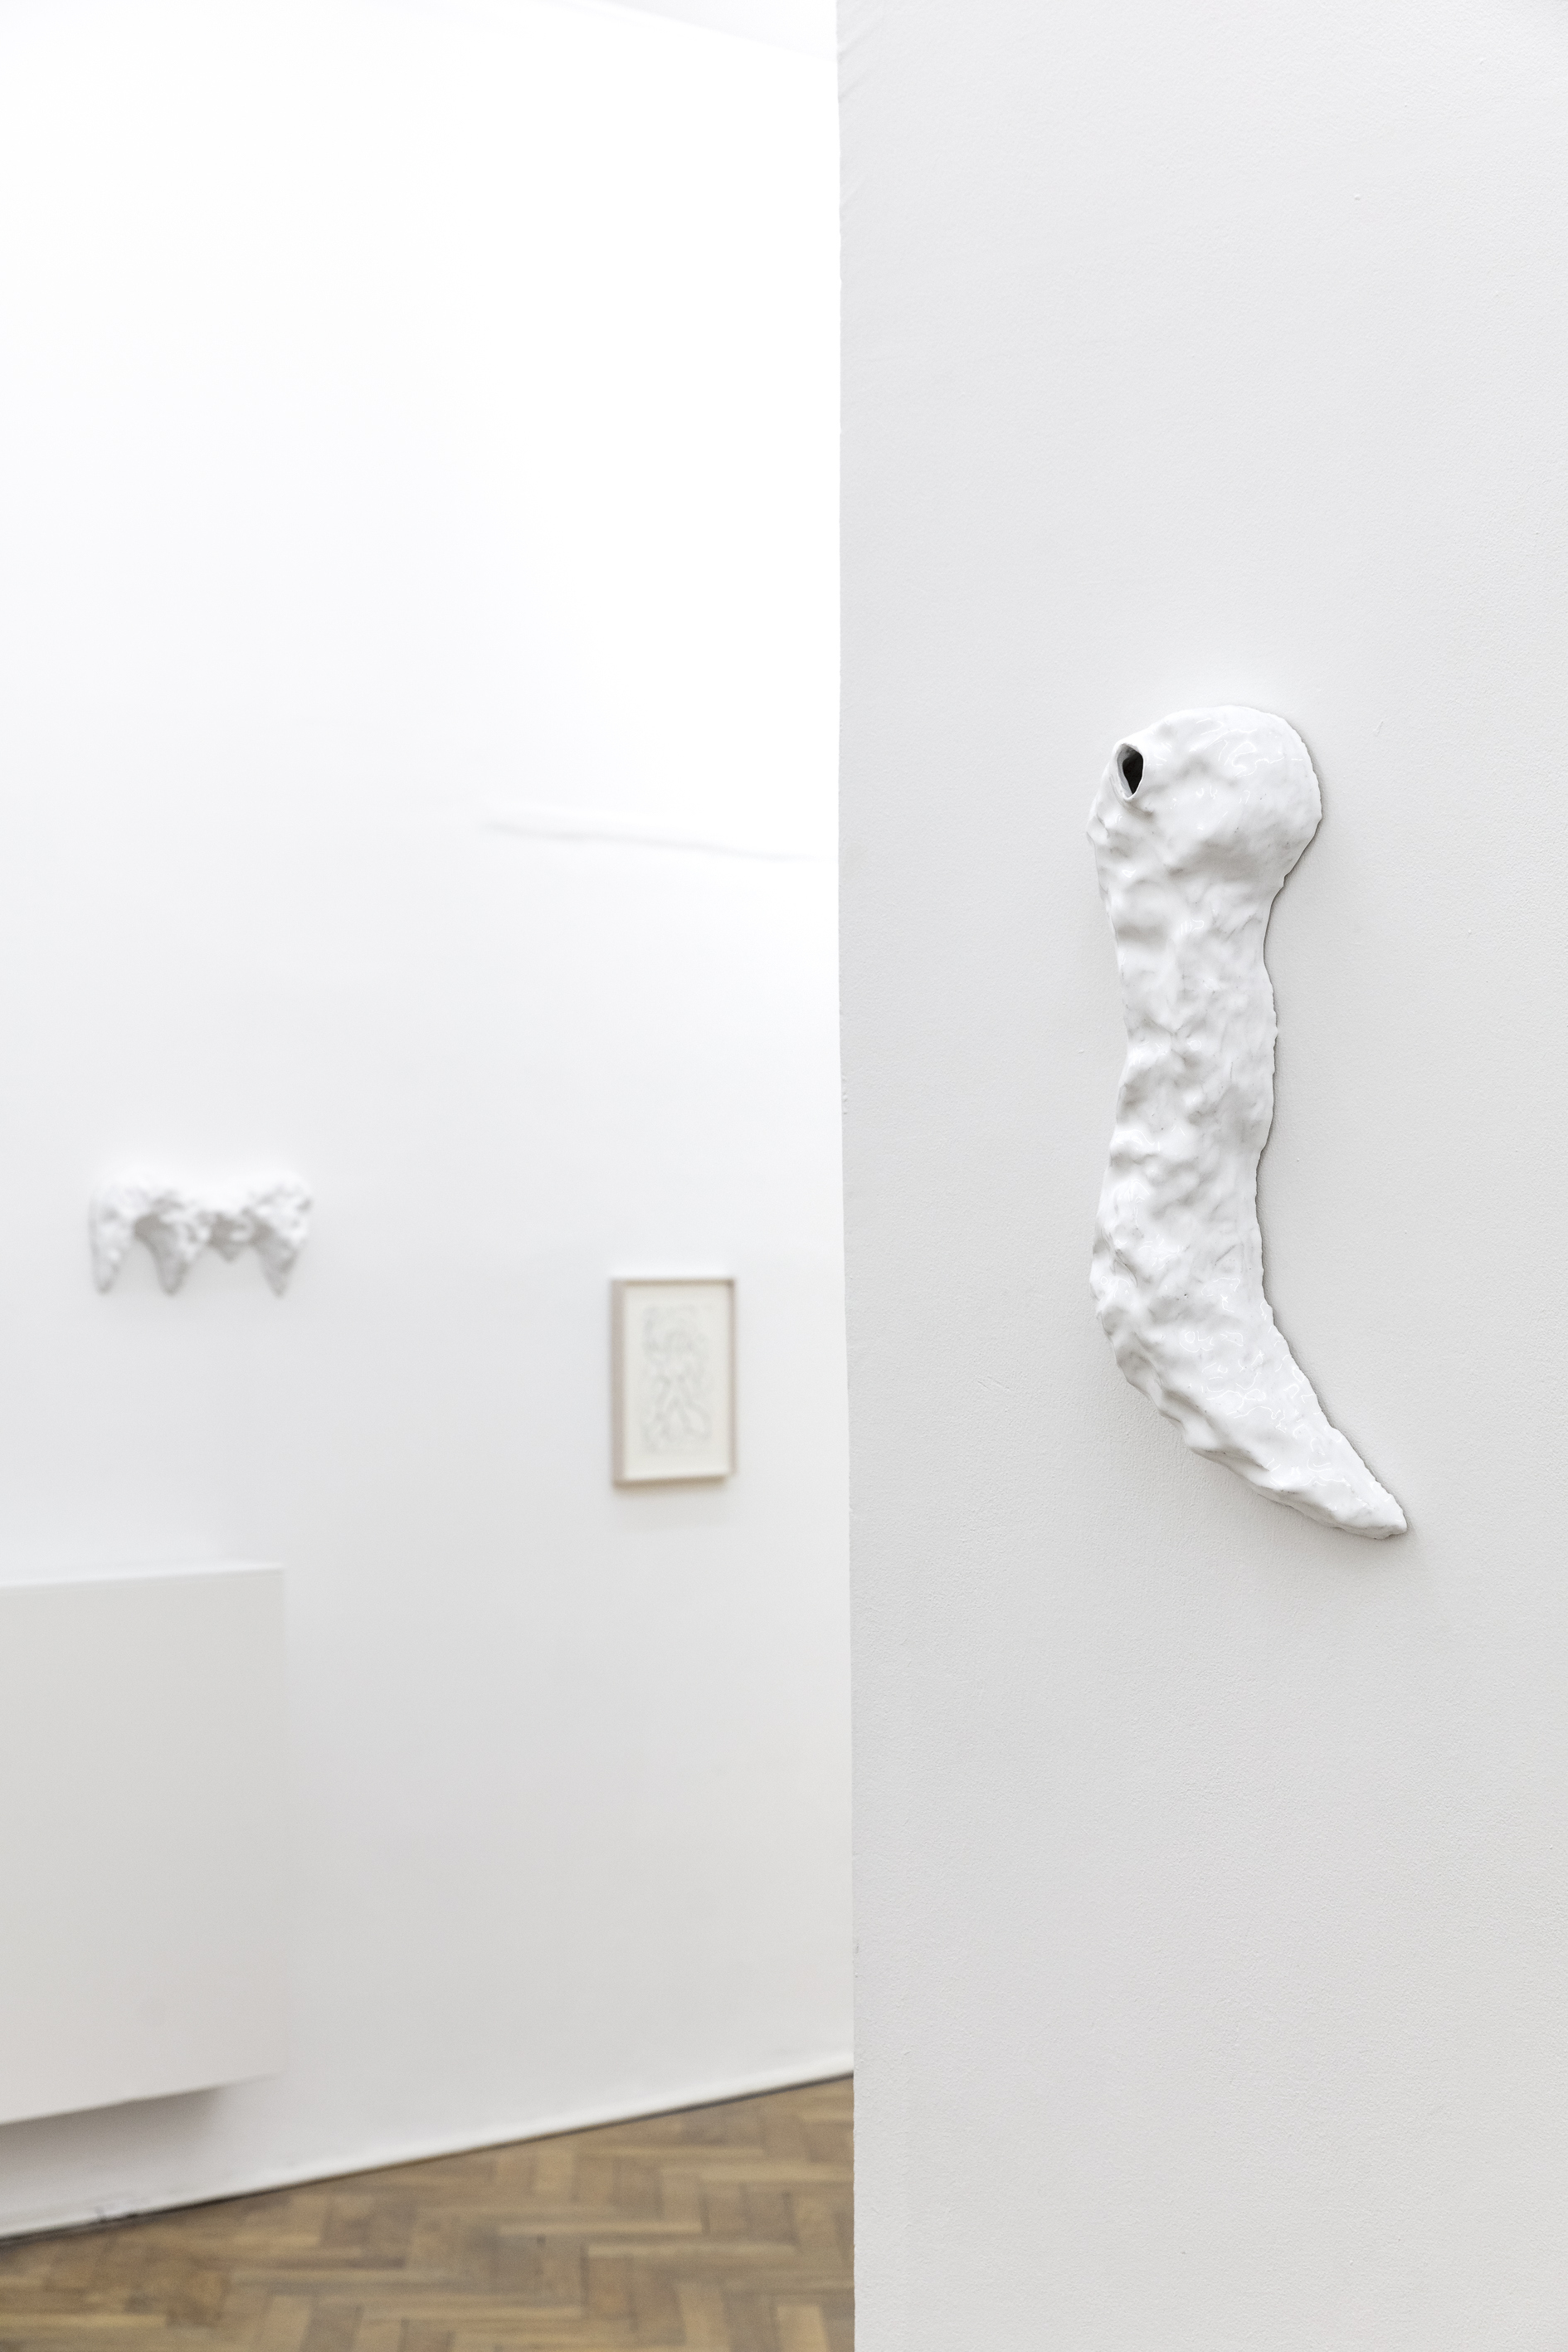 VARIOUS OTHERS 2023, Kinke Kooi, Anna McCarthy, Monique Mouton, installation view at Sperling, Munich